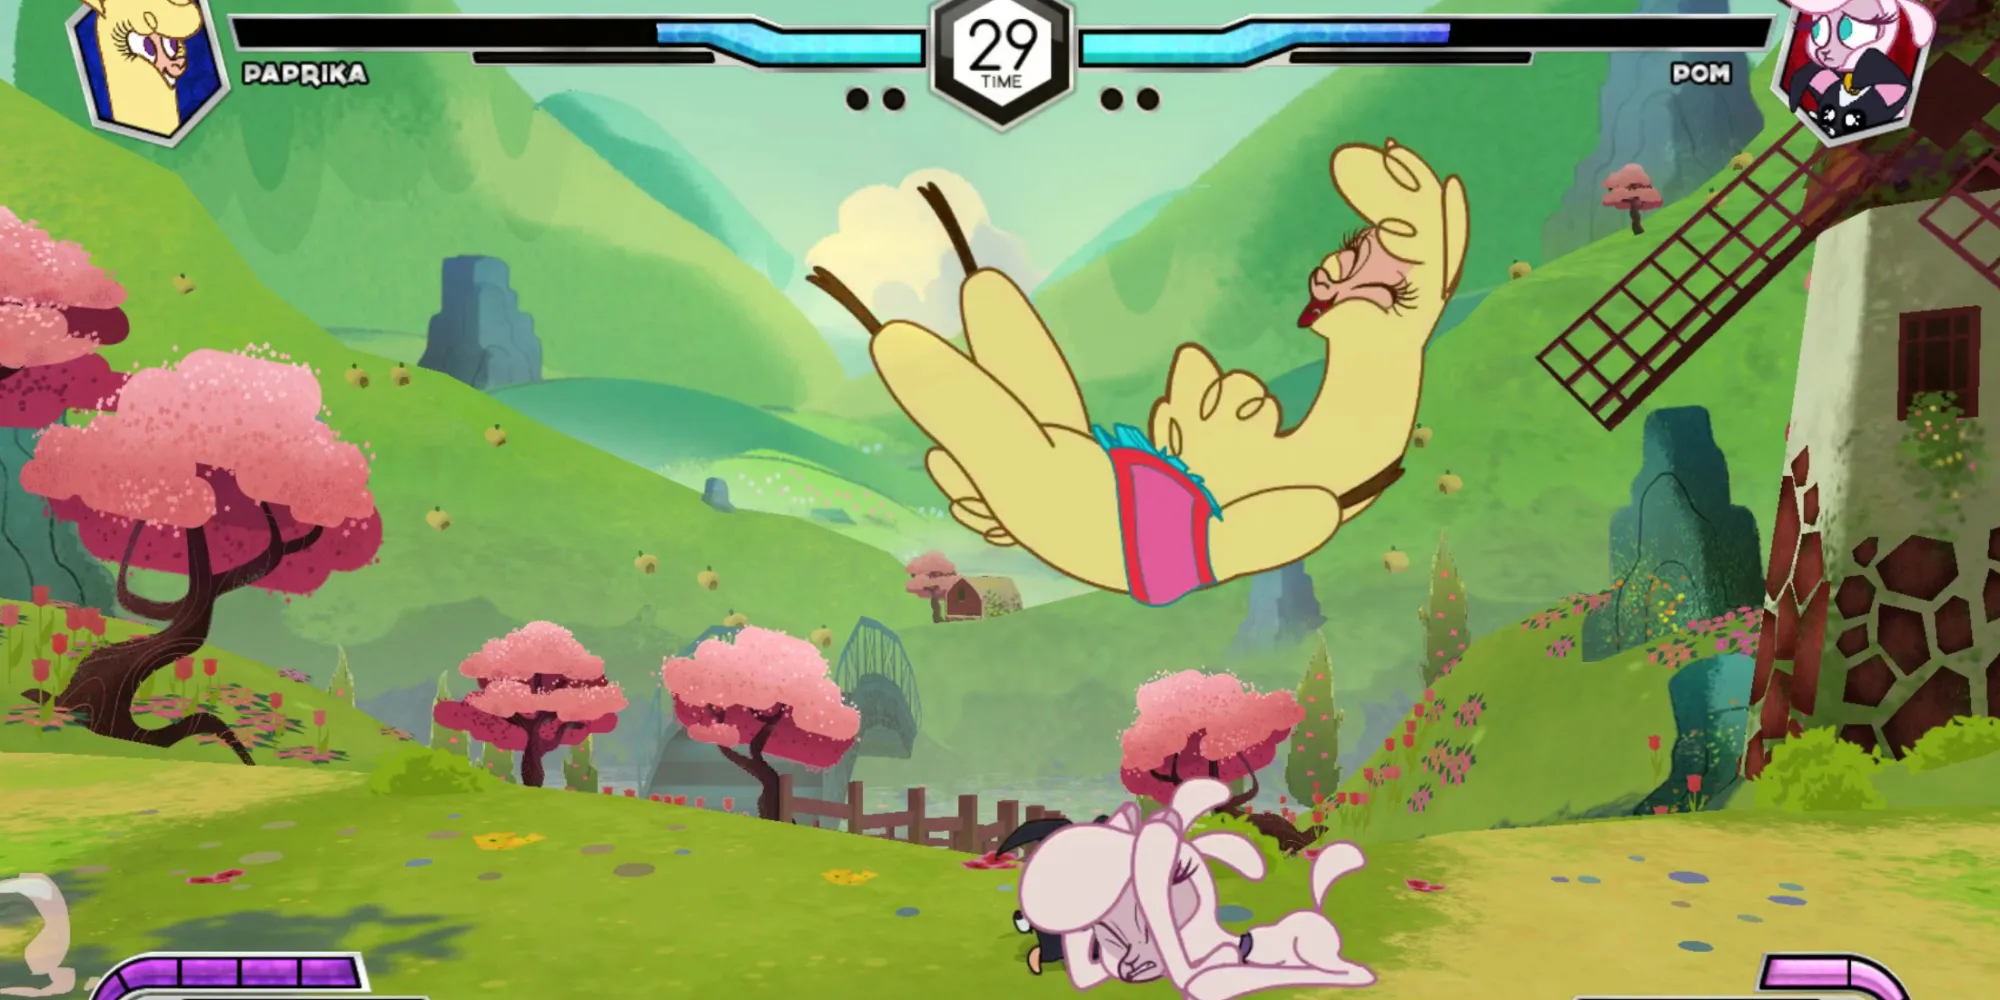 Them's Fightin' Herds - Paprika usa animazioni ingannevoli a suo vantaggio